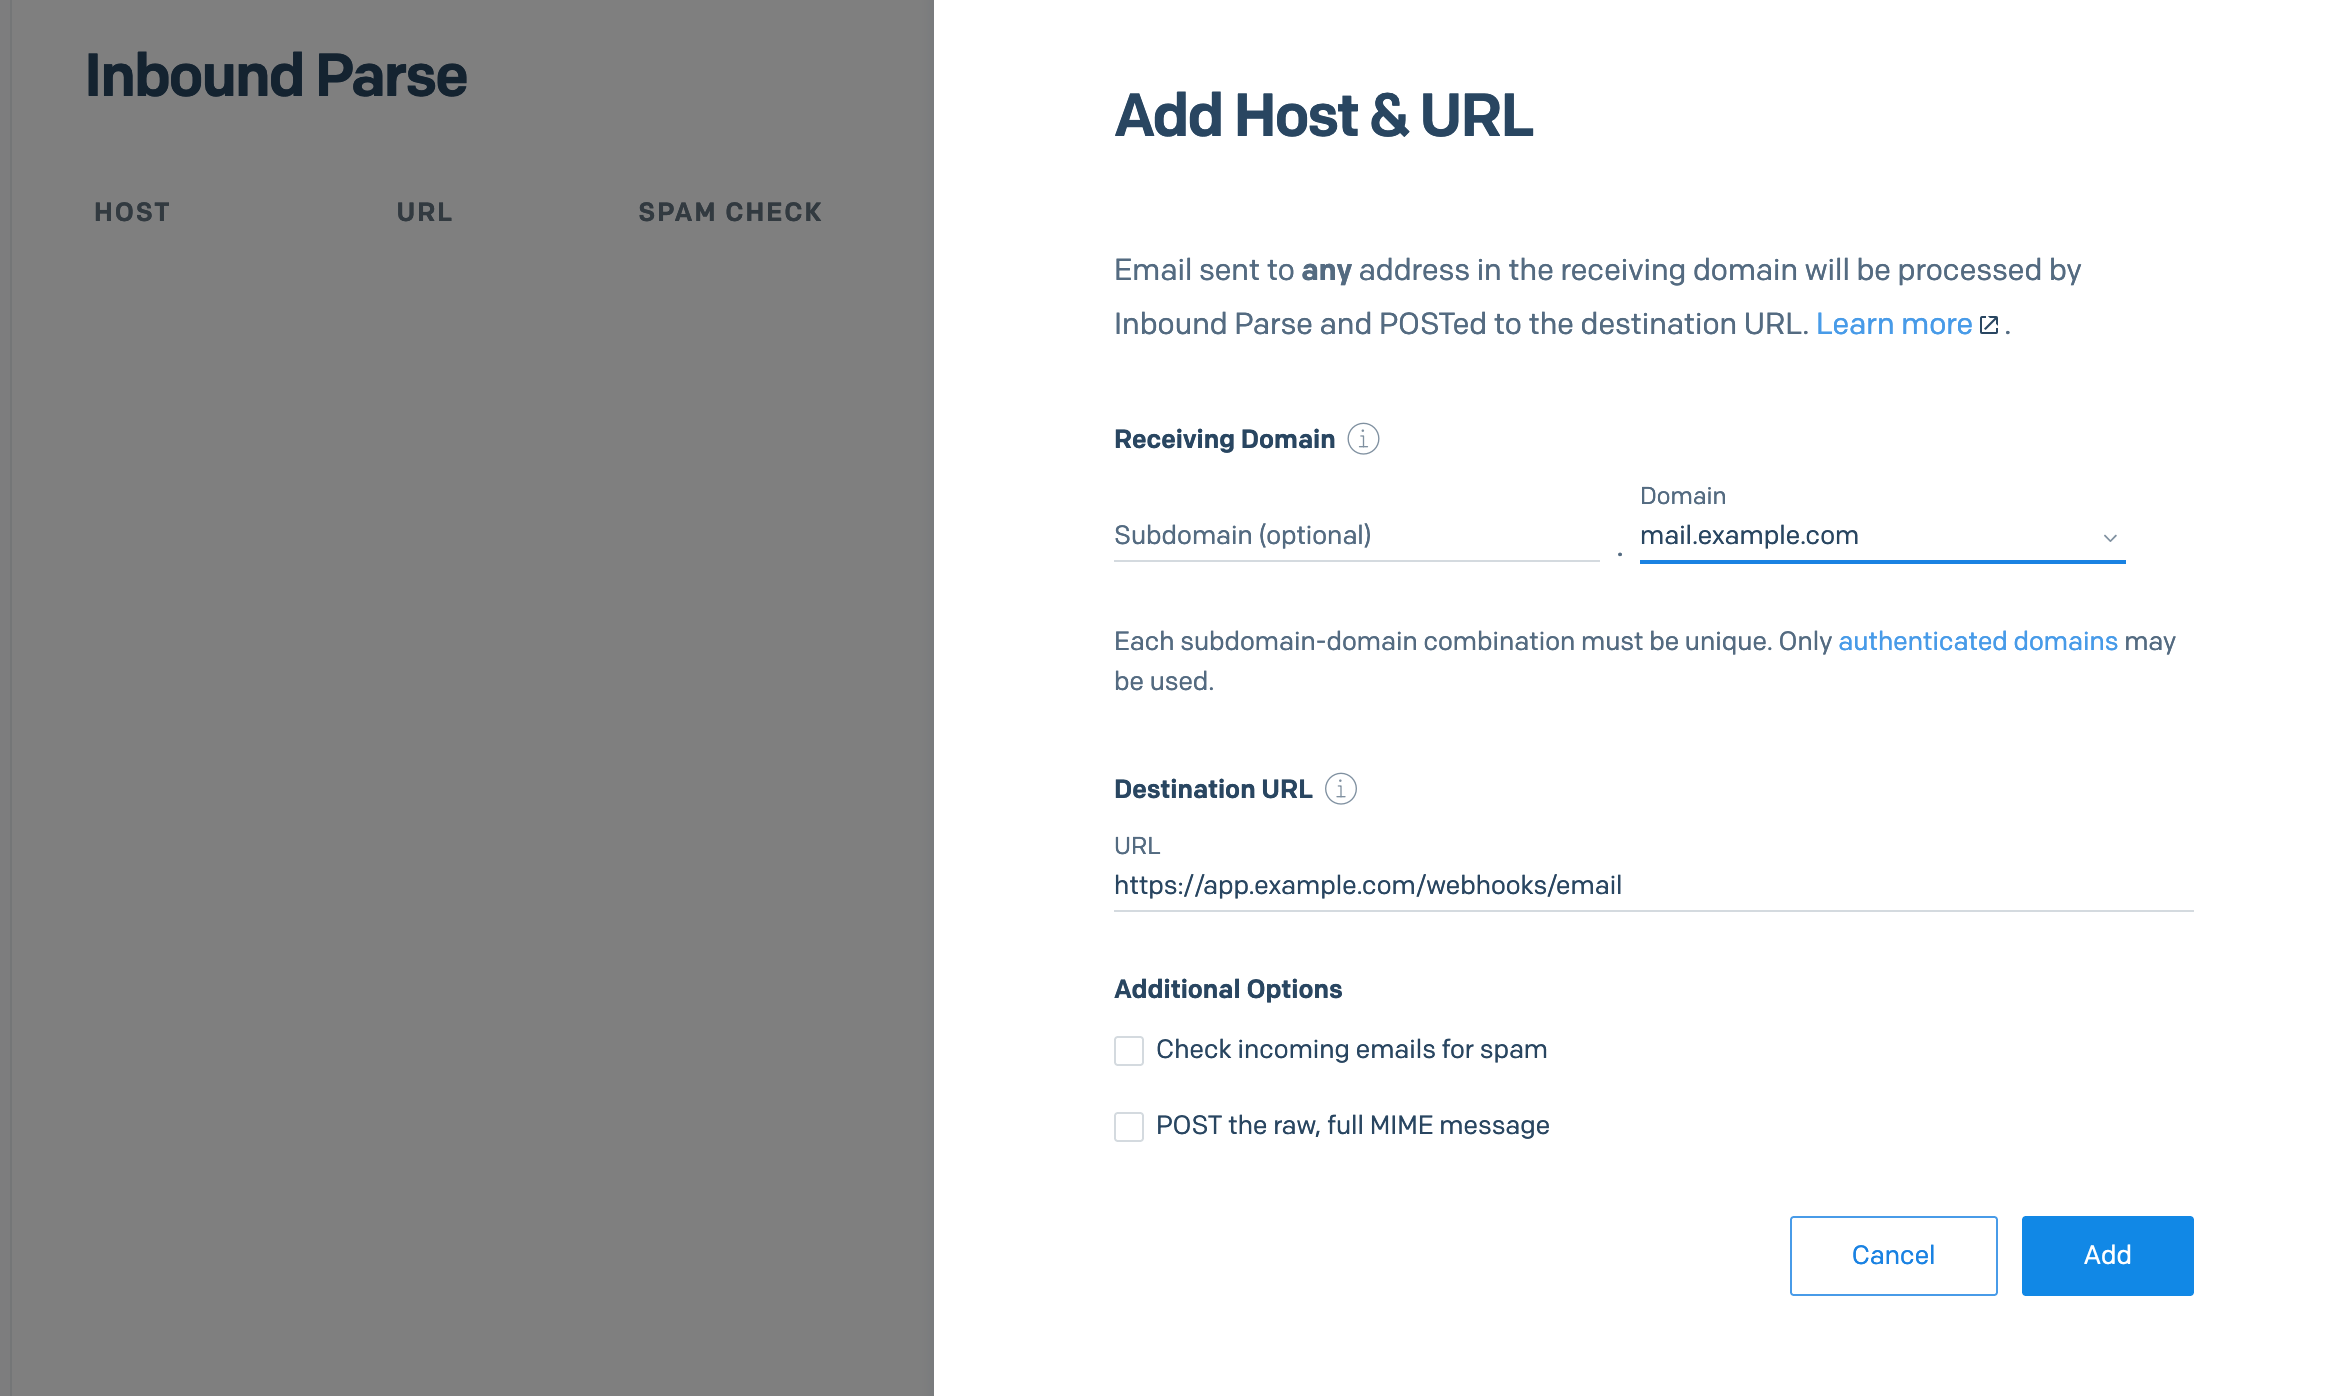 Sendgrid Inbound Parse interface: creating a new webhook URL